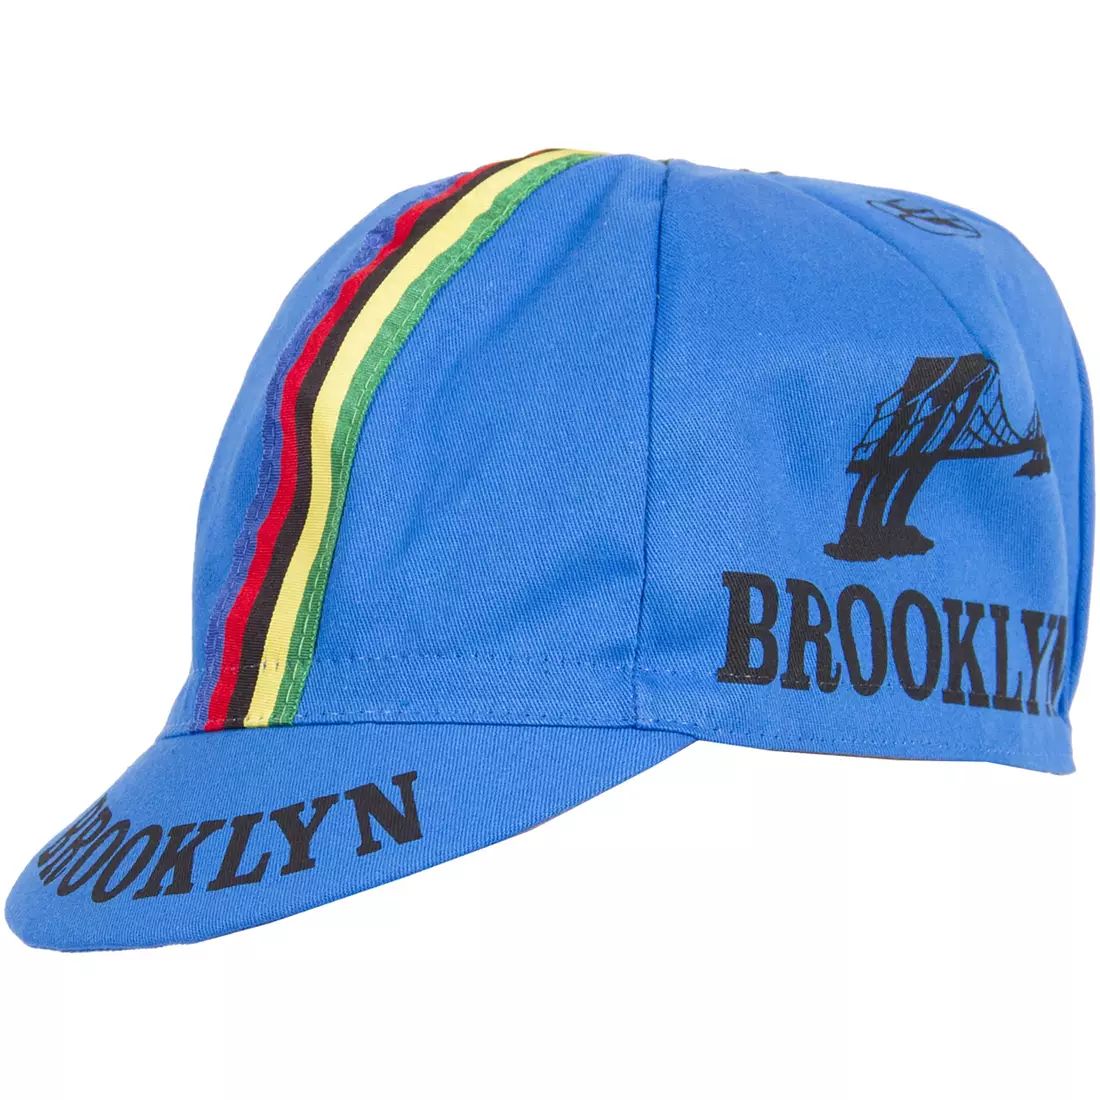 GIORDANA SS18 cycling cap - Brooklyn - Azzurro Blue w/ Stripe tape GI-S6-COCA-BROK-AZZU one size